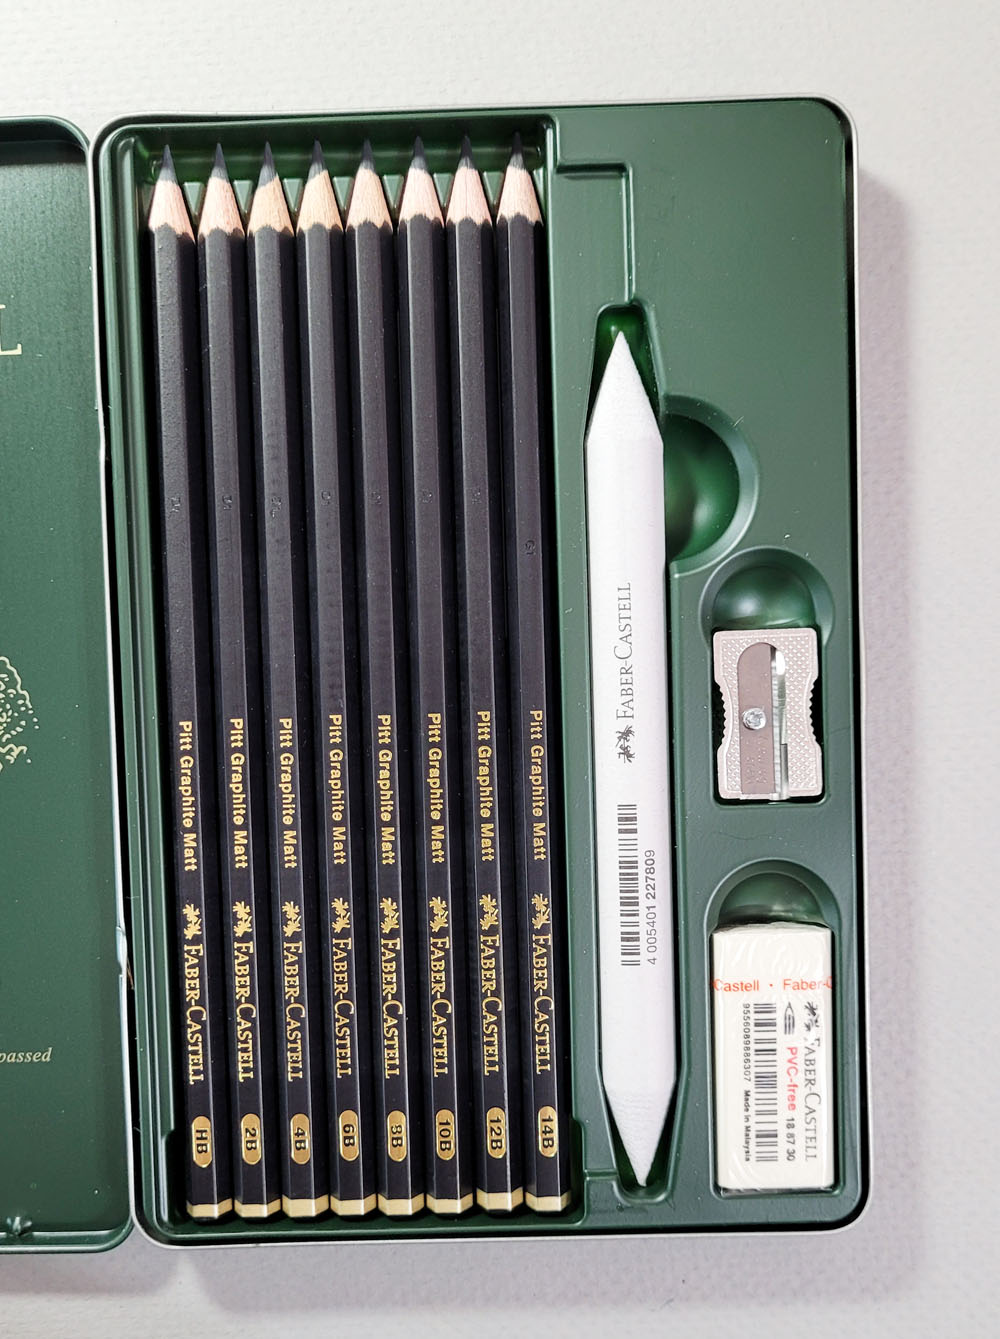 Faber-Castell Pitt Graphite Matt Review-The perfect black pencil